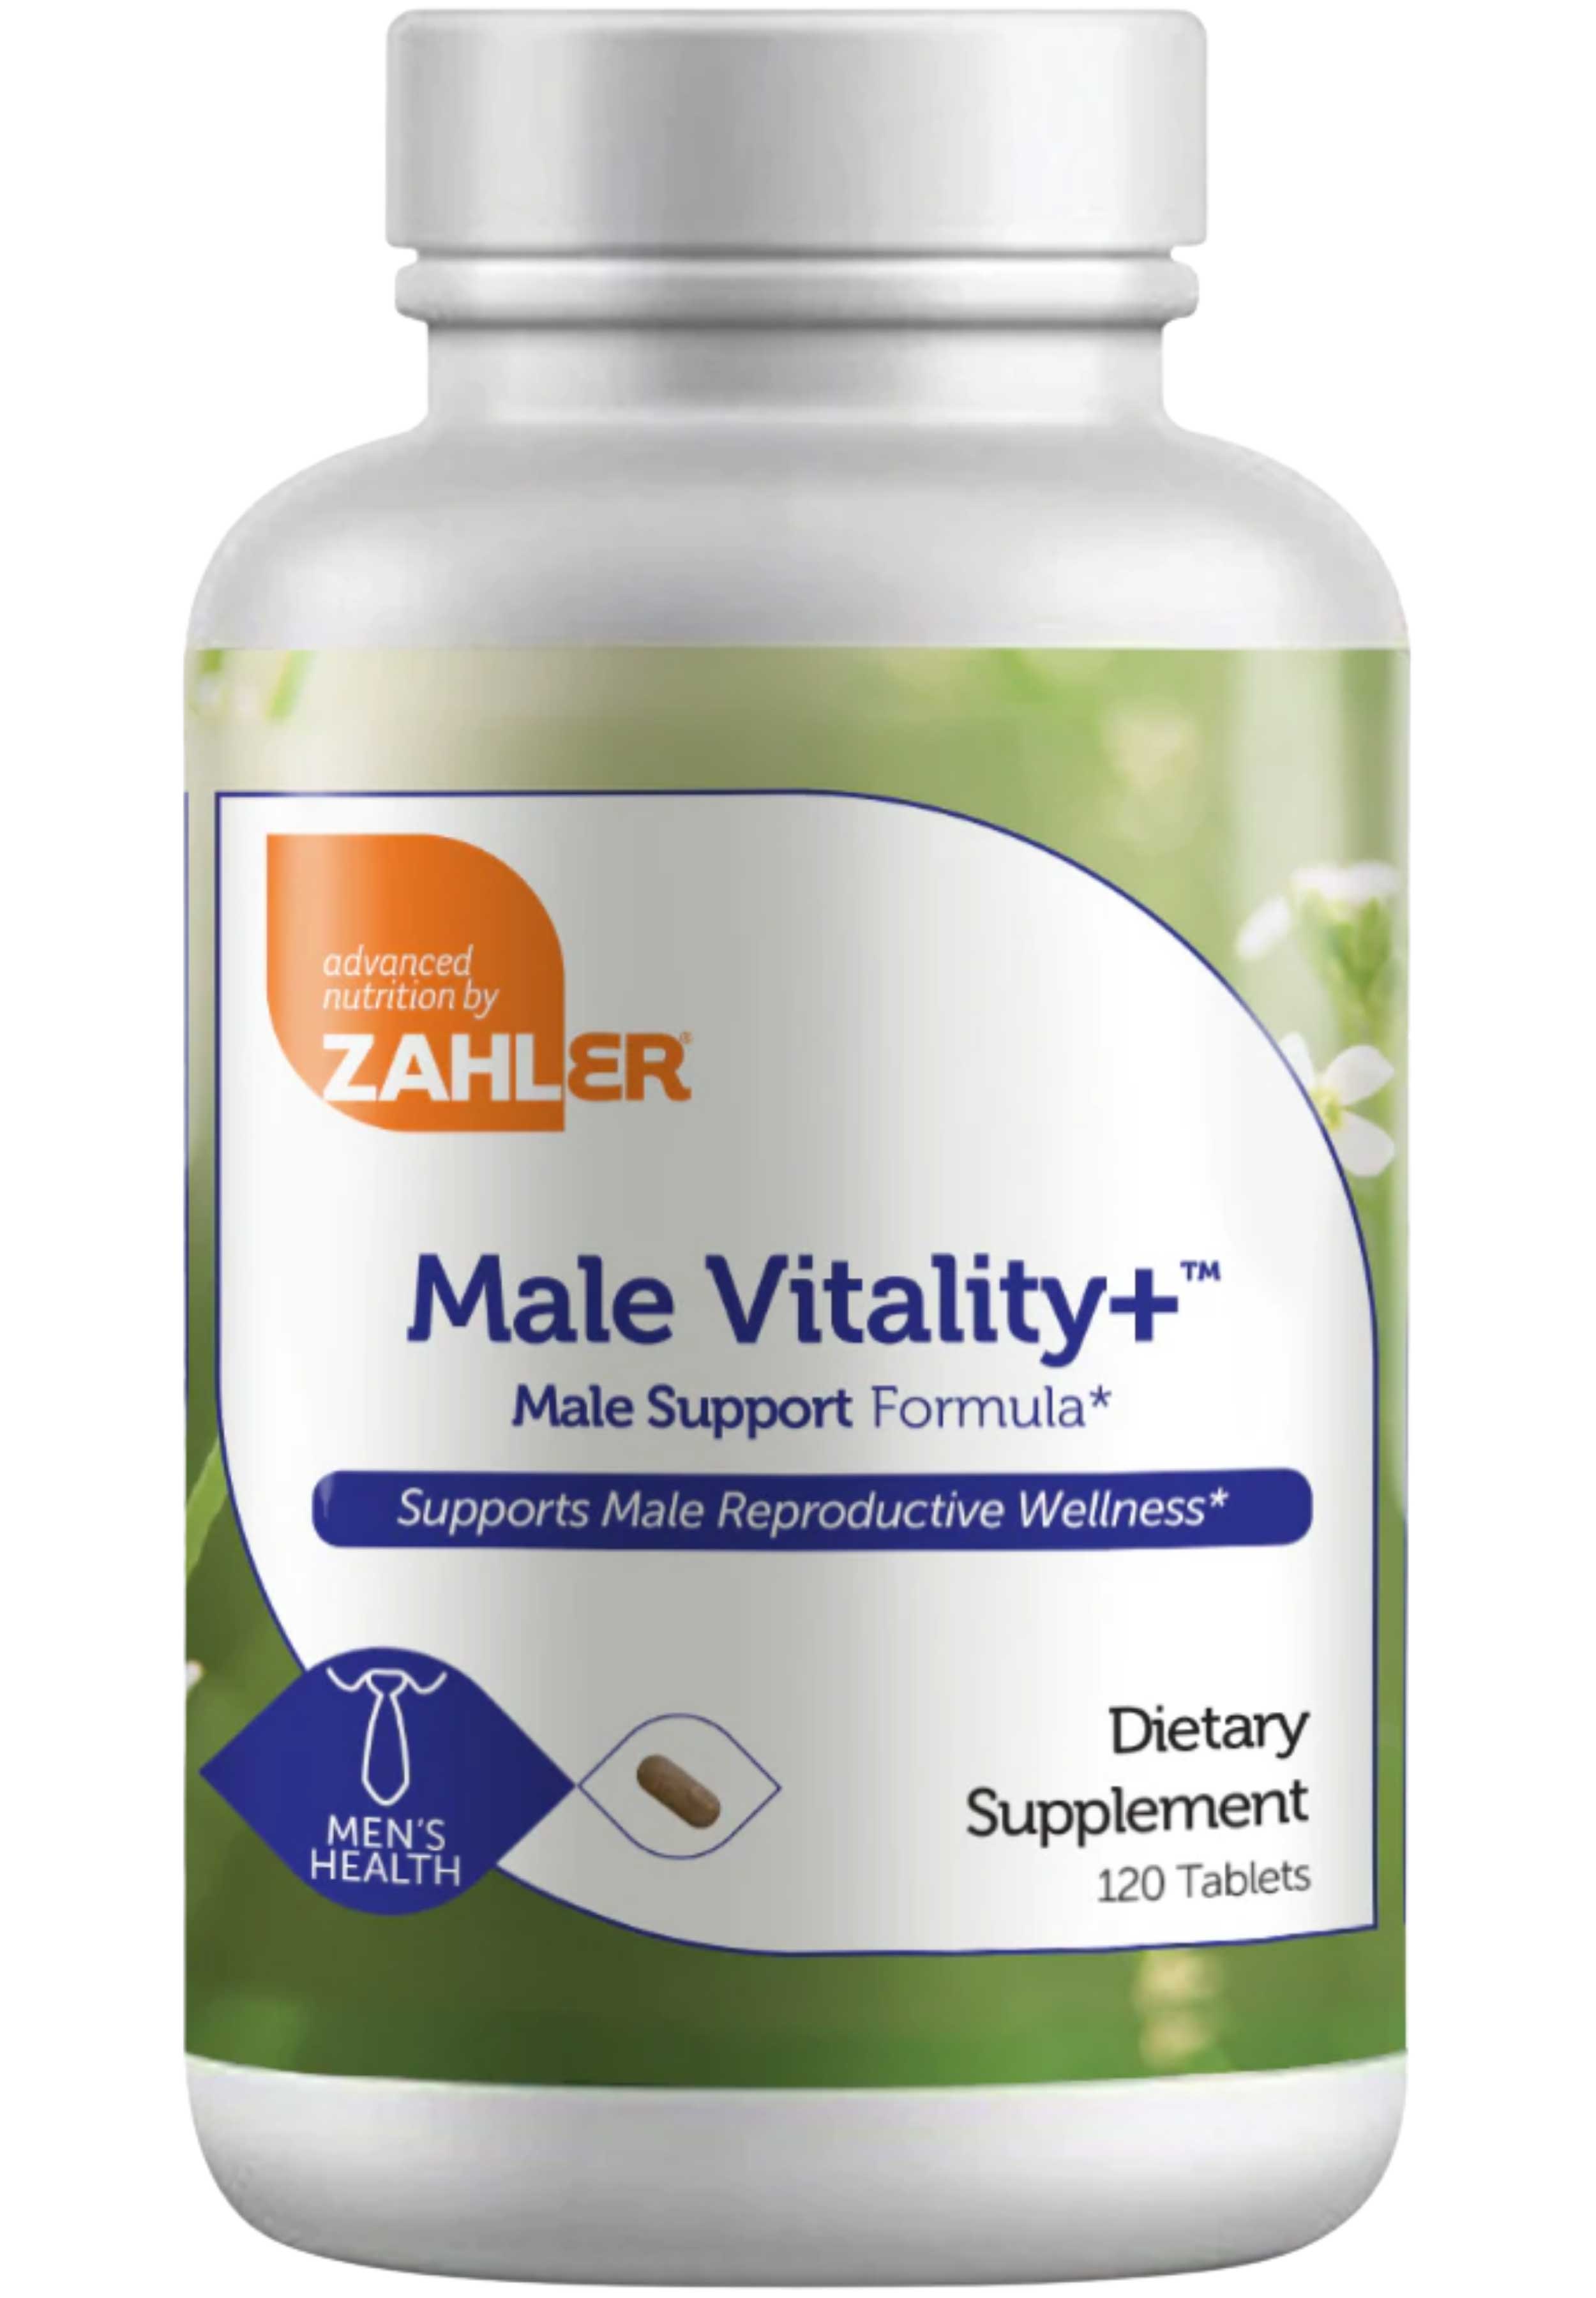 Advanced Nutrition By Zahler Male Vitality+